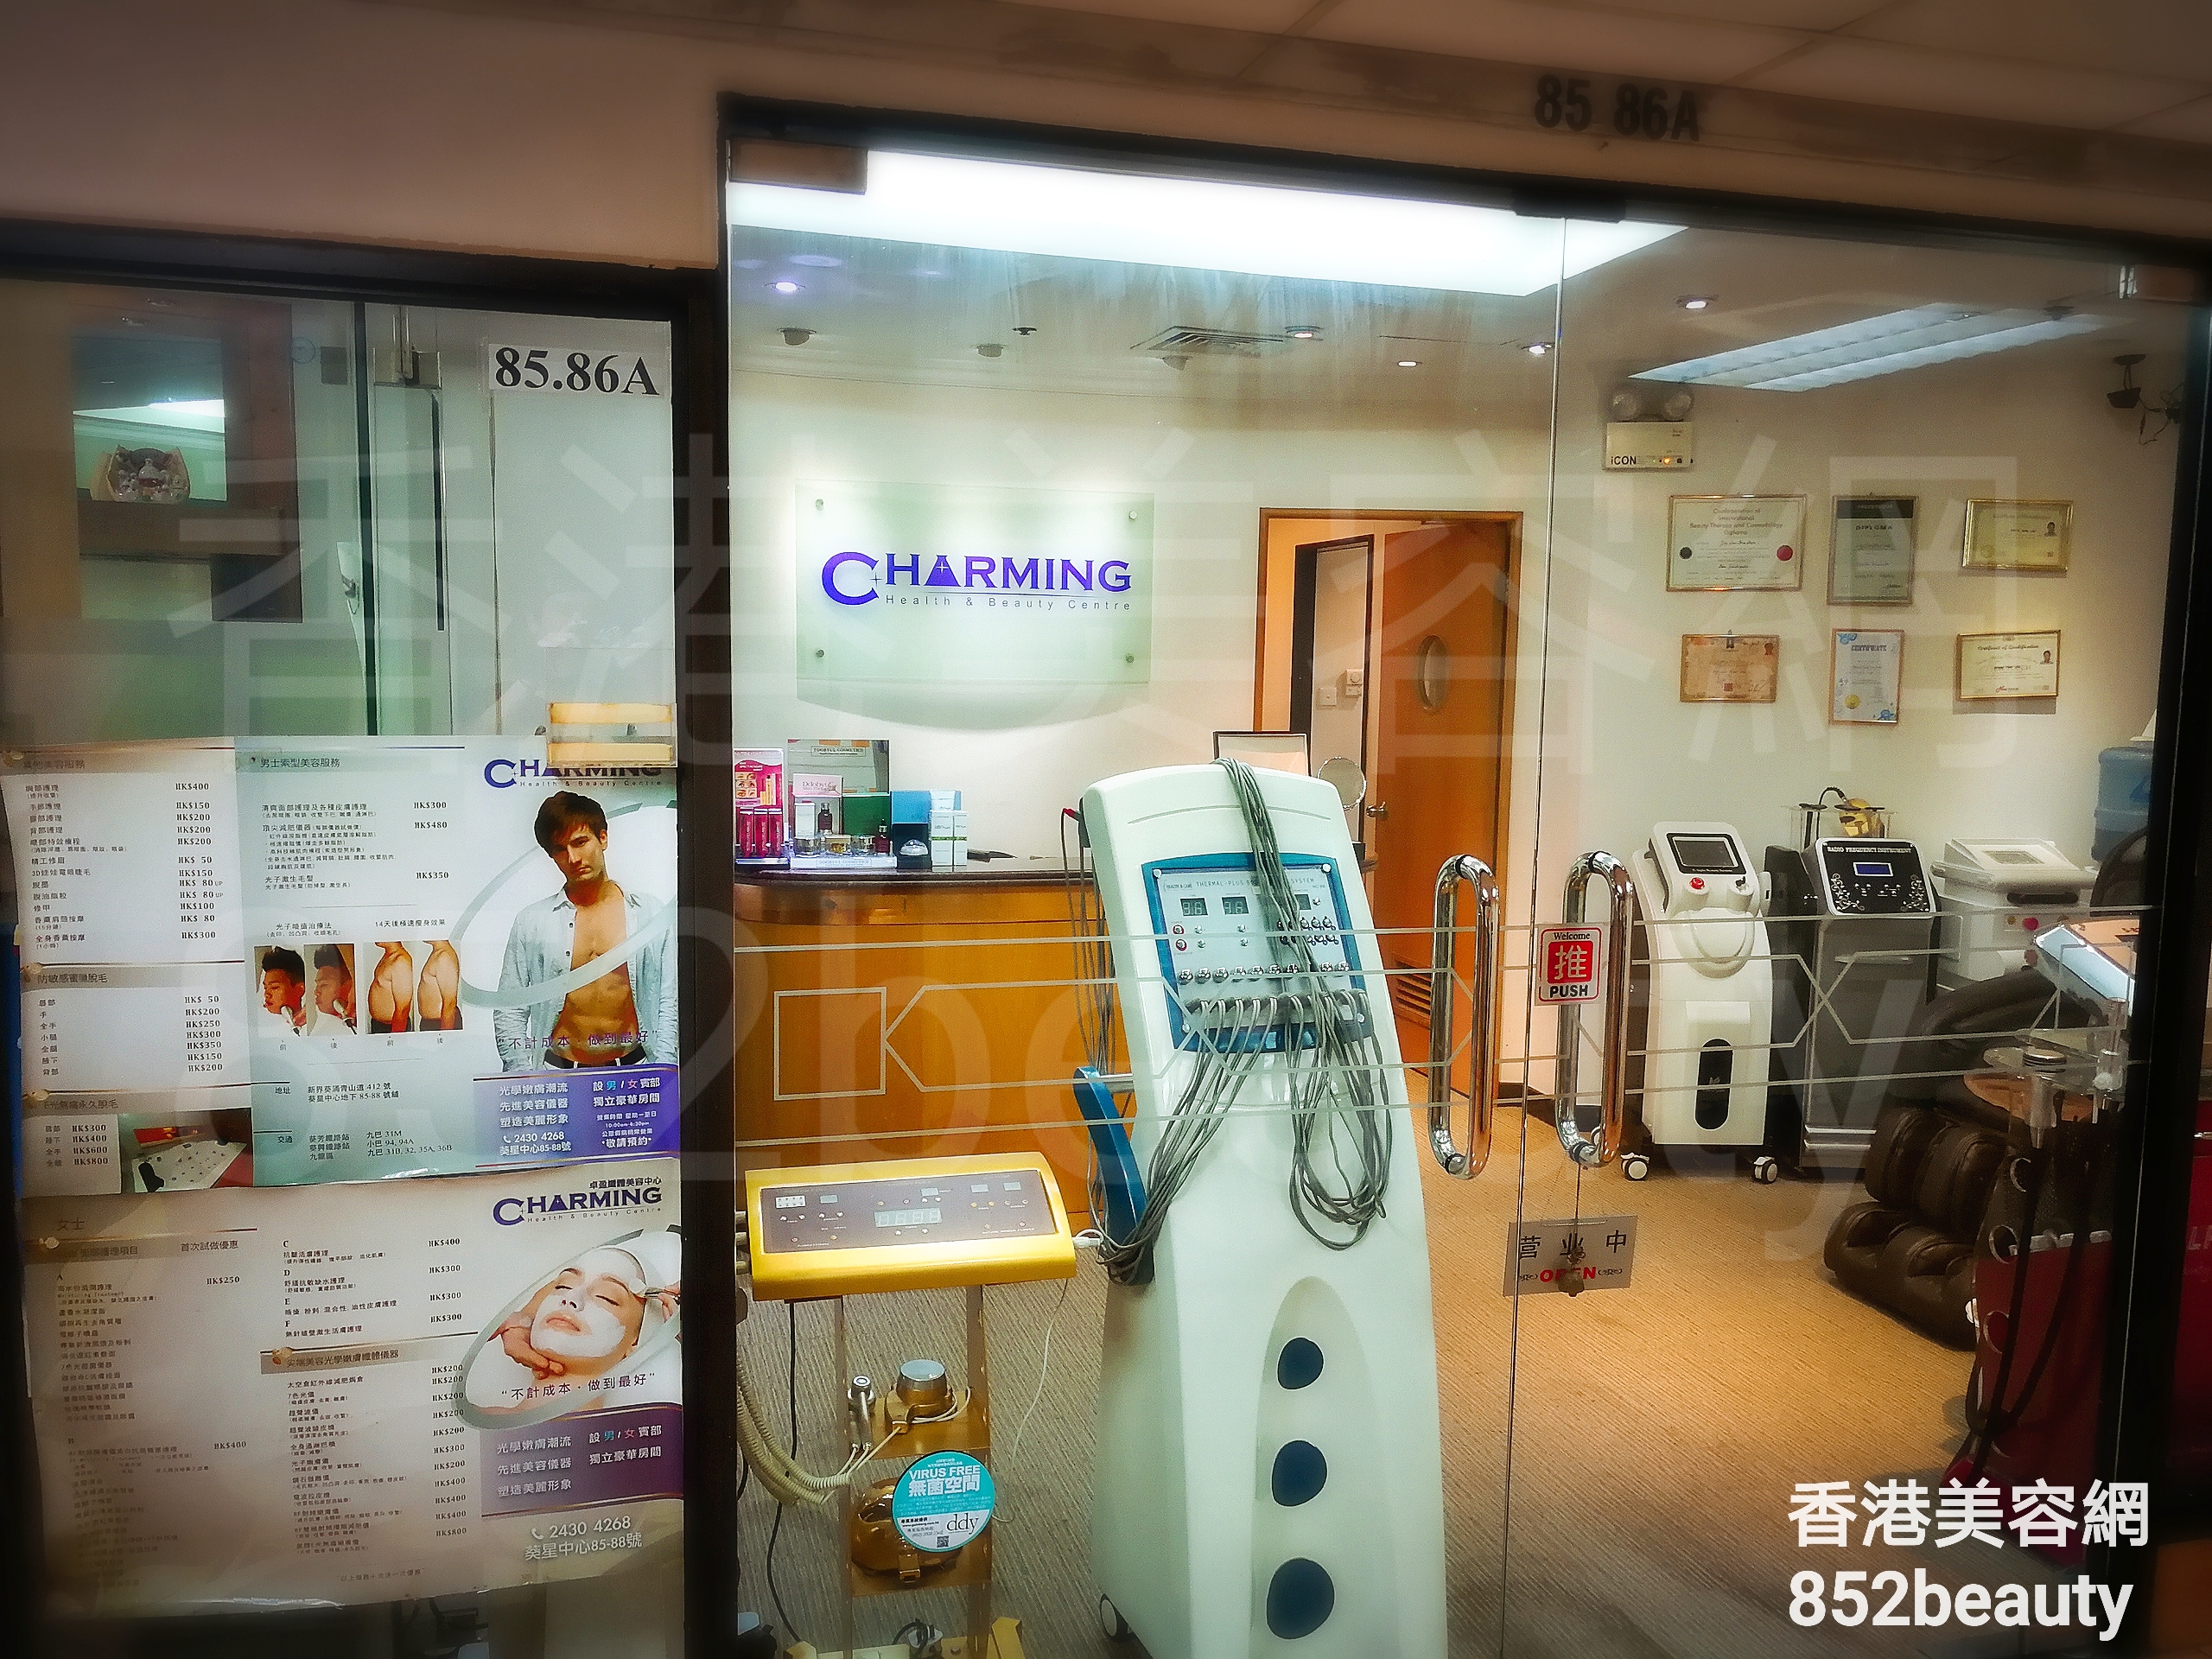 Massage/SPA: Charming Health & Beauty Centre